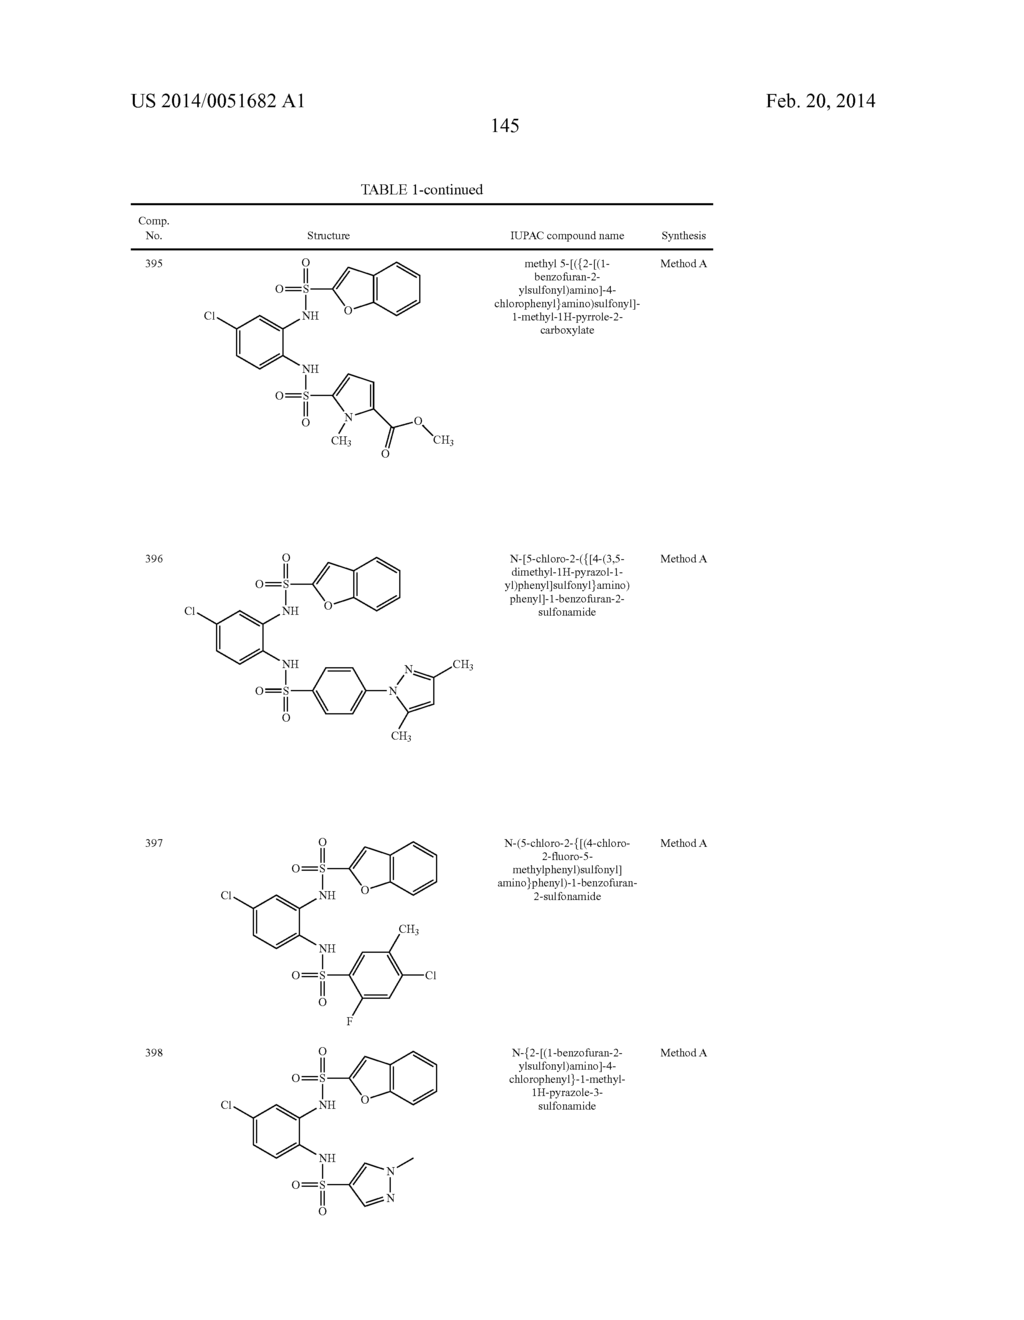 NOVEL 1,2- BIS-SULFONAMIDE DERIVATIVES AS CHEMOKINE RECEPTOR MODULATORS - diagram, schematic, and image 146